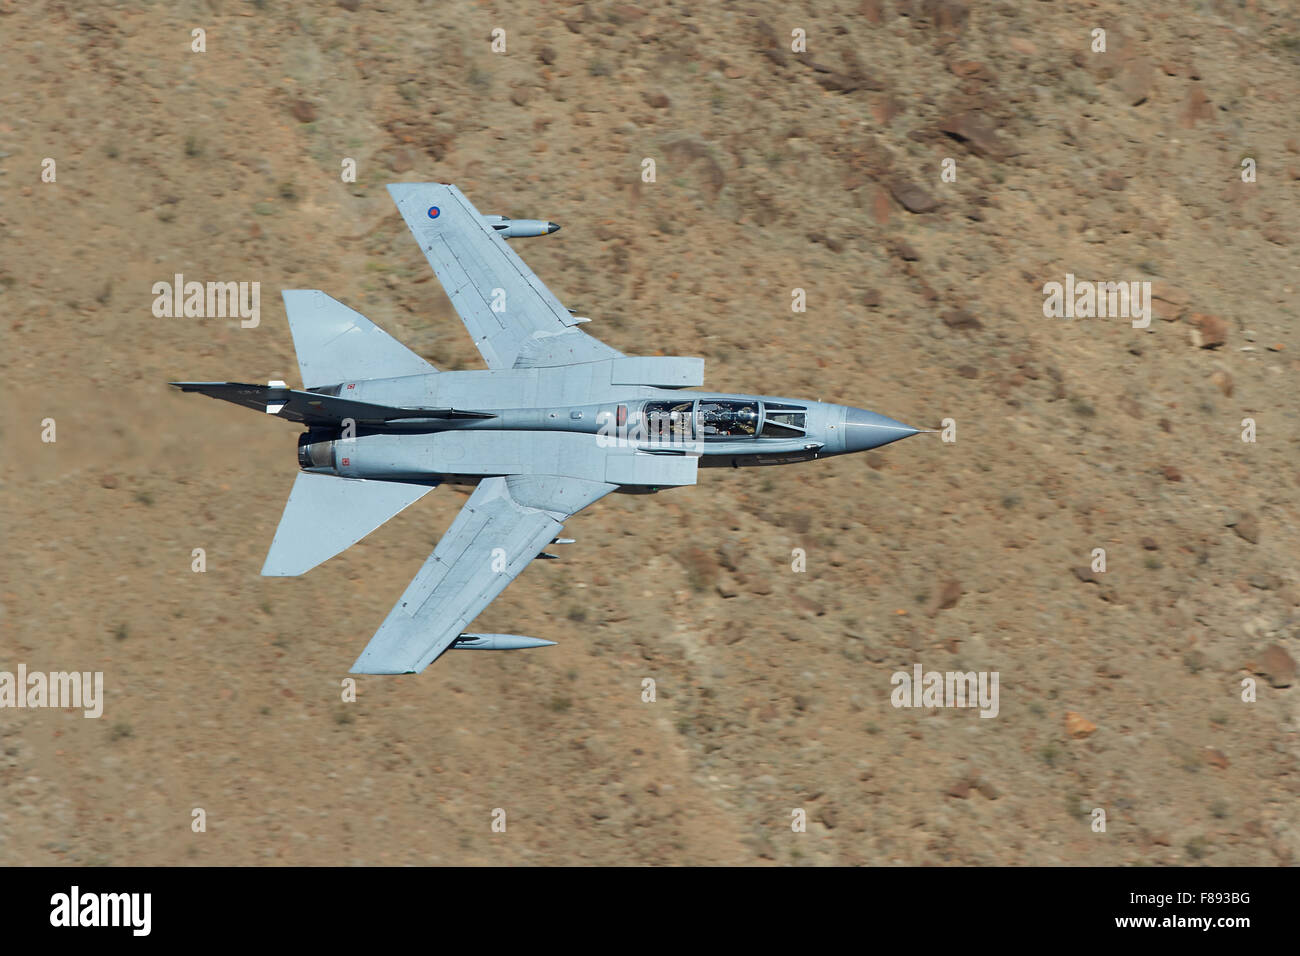 Royal Air Force jet de combate Tornado GR4 volando a muy bajo nivel a través de un valle desértico. Foto de stock